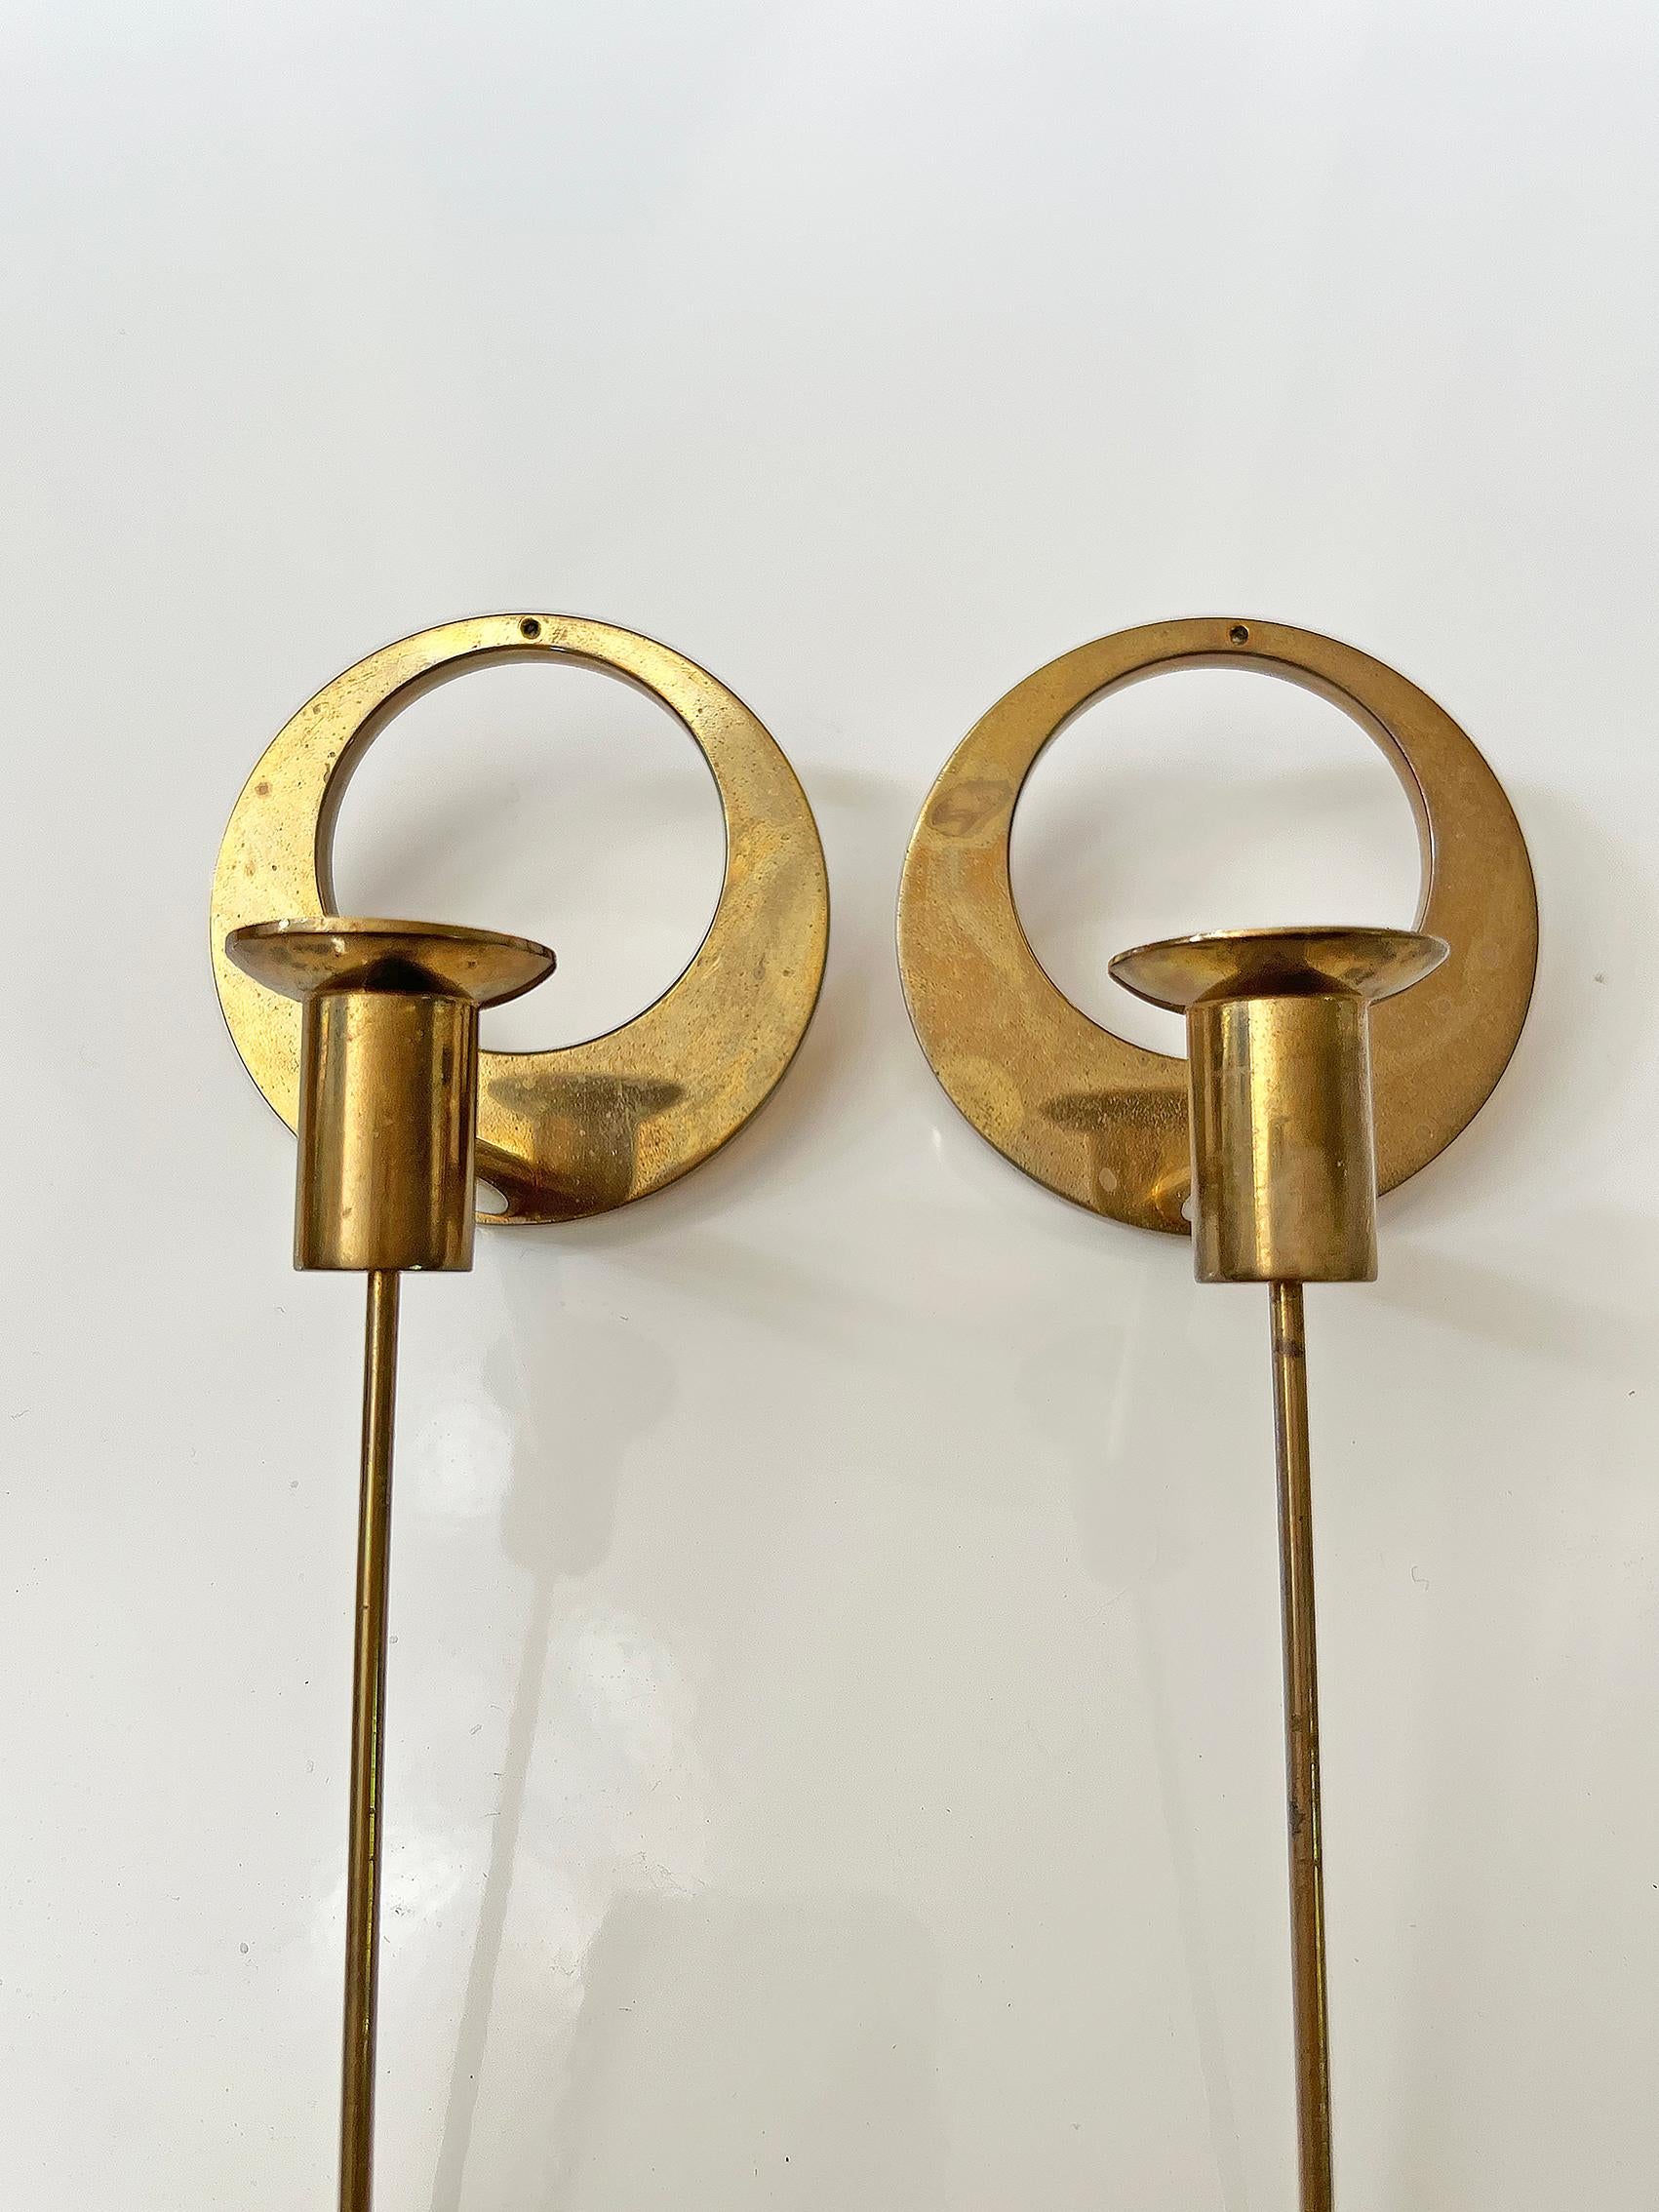 Mid-20th Century Wall Hanged Candlesticks in Brass by Arthur Pe, Kolbäck in Sweden For Sale